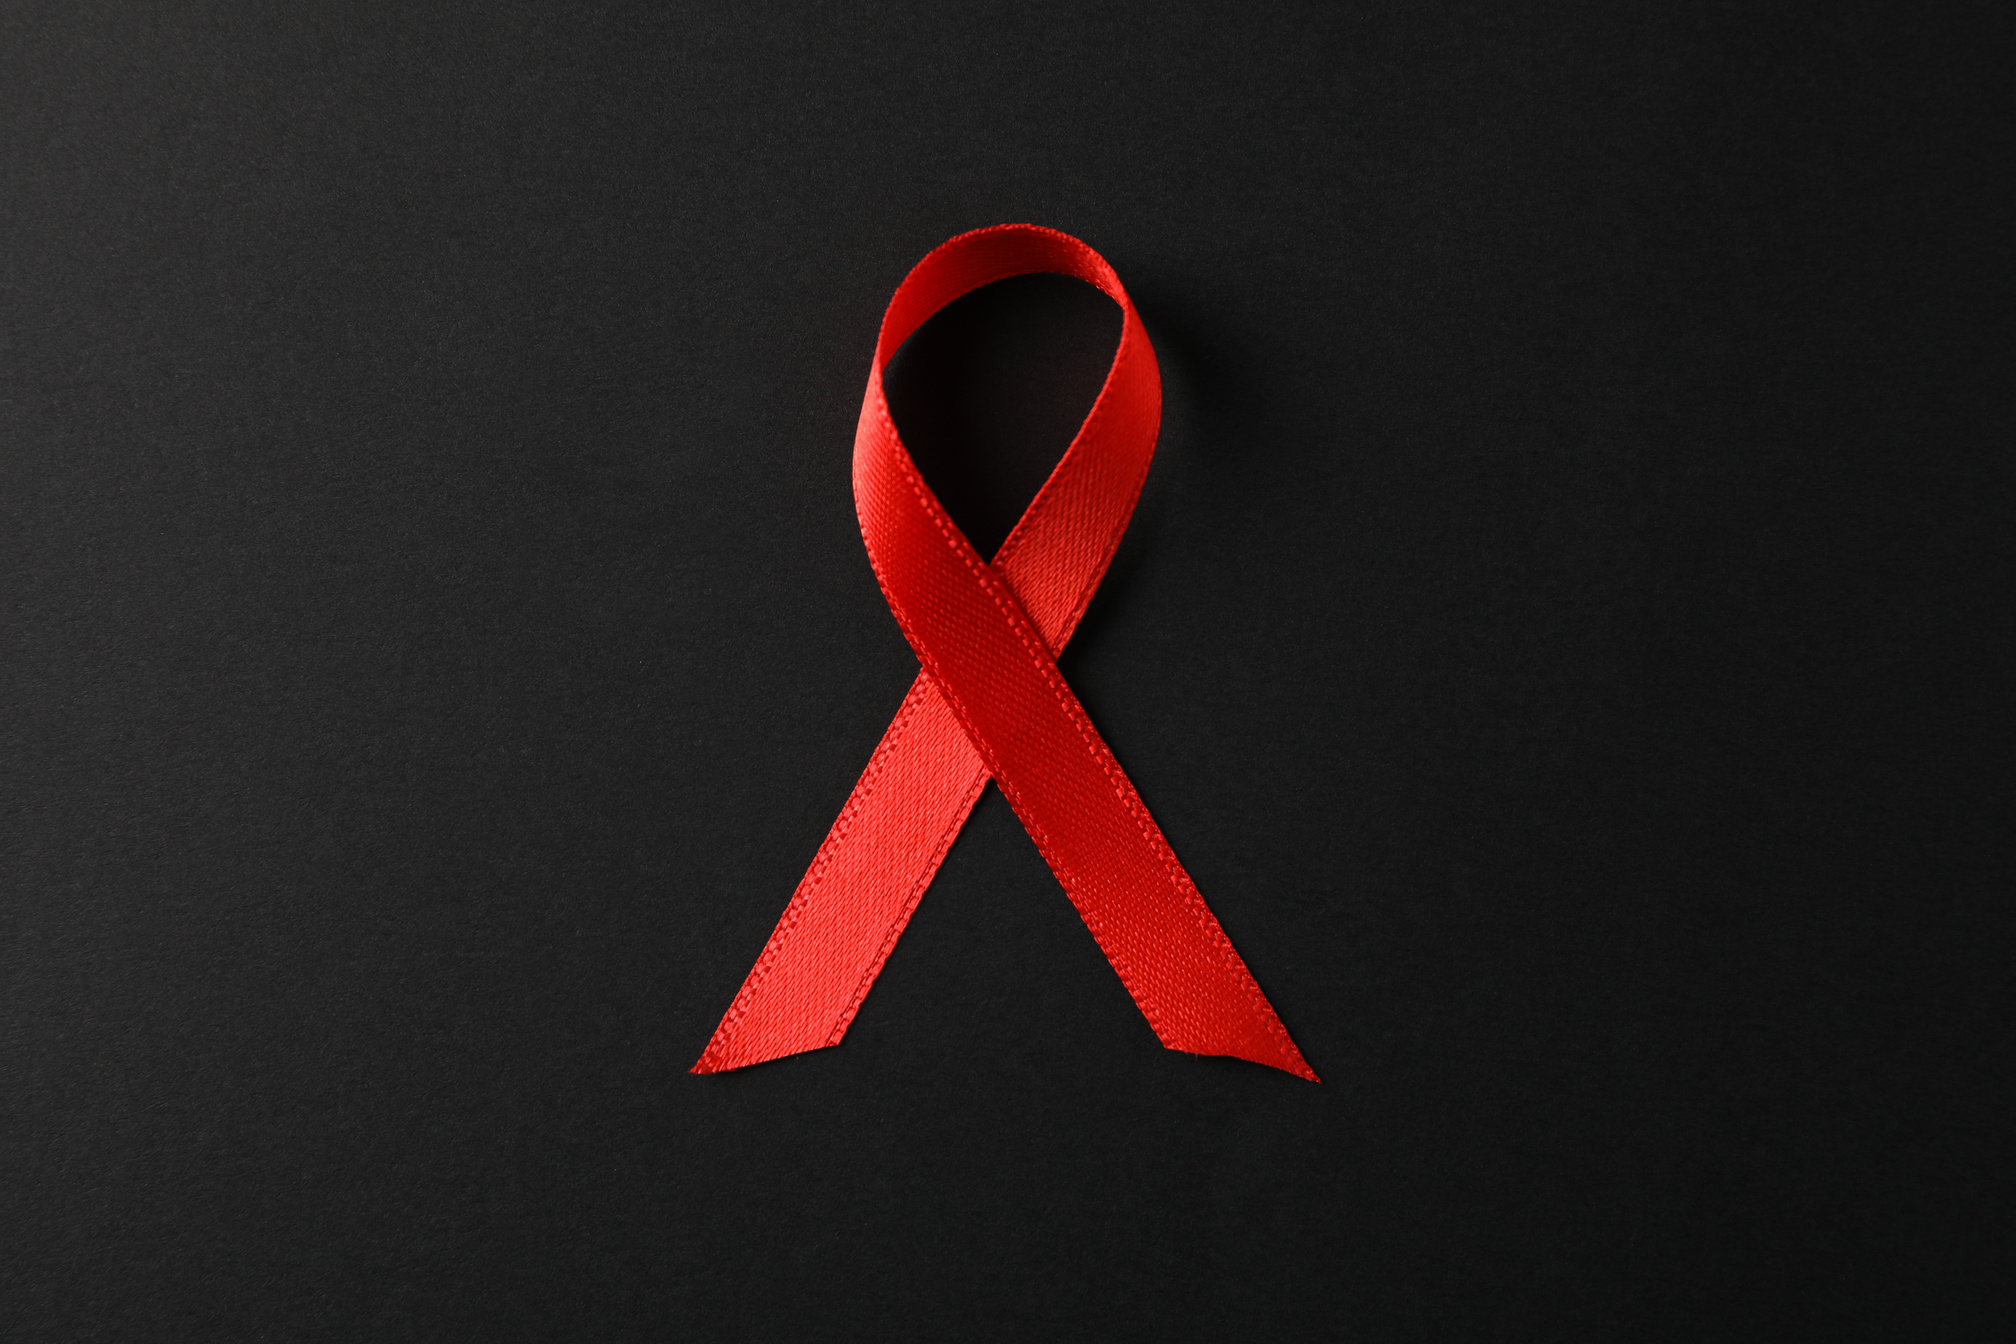 AIDS Awareness Ribbon on Black Background